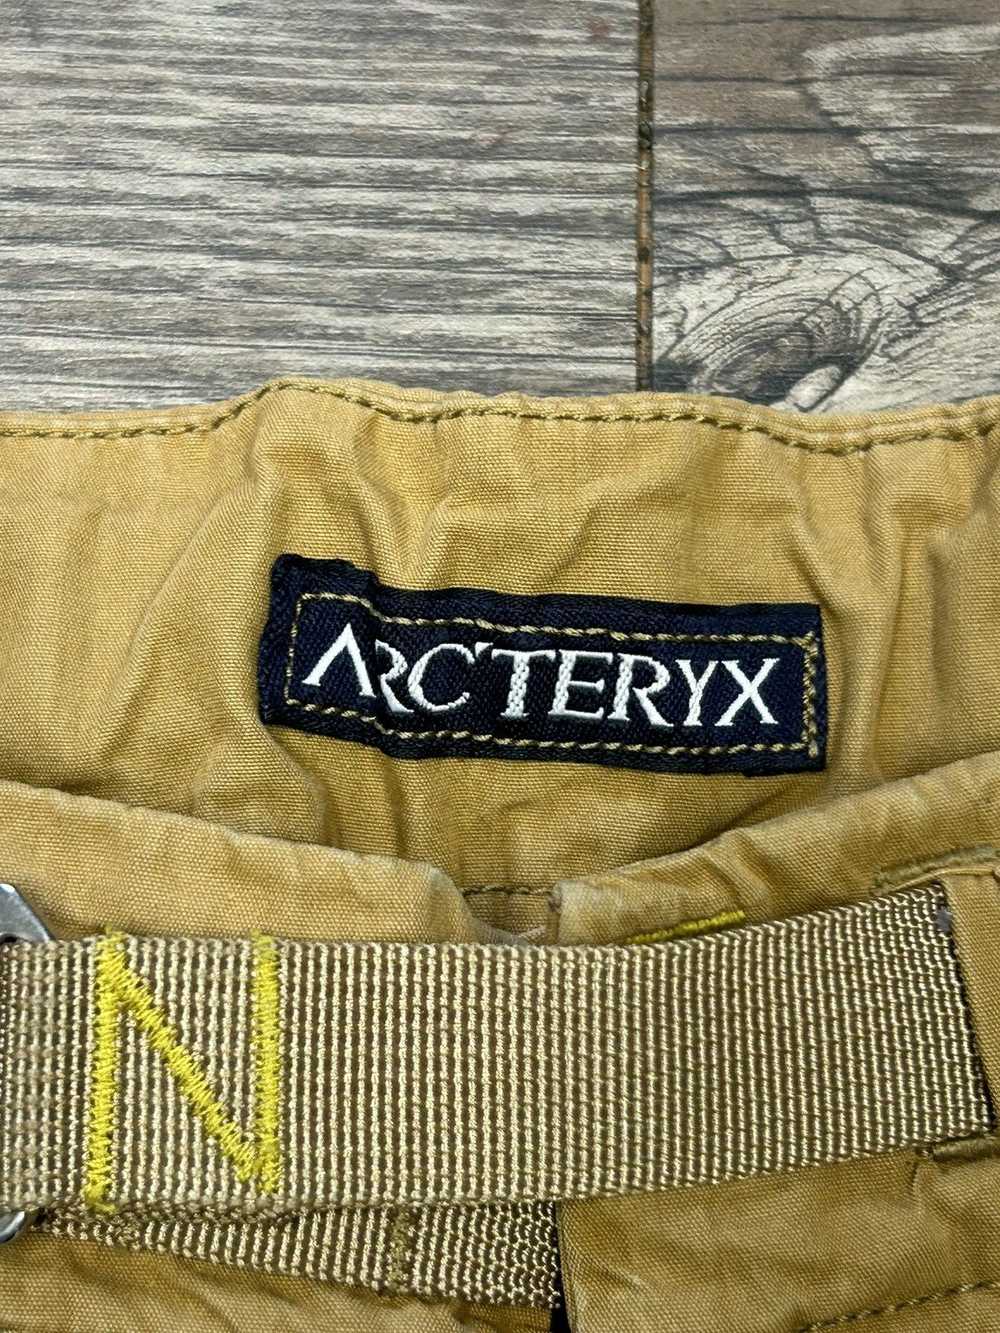 Arc'Teryx Arc’Teryx Casual Straight Leg Pants - image 4